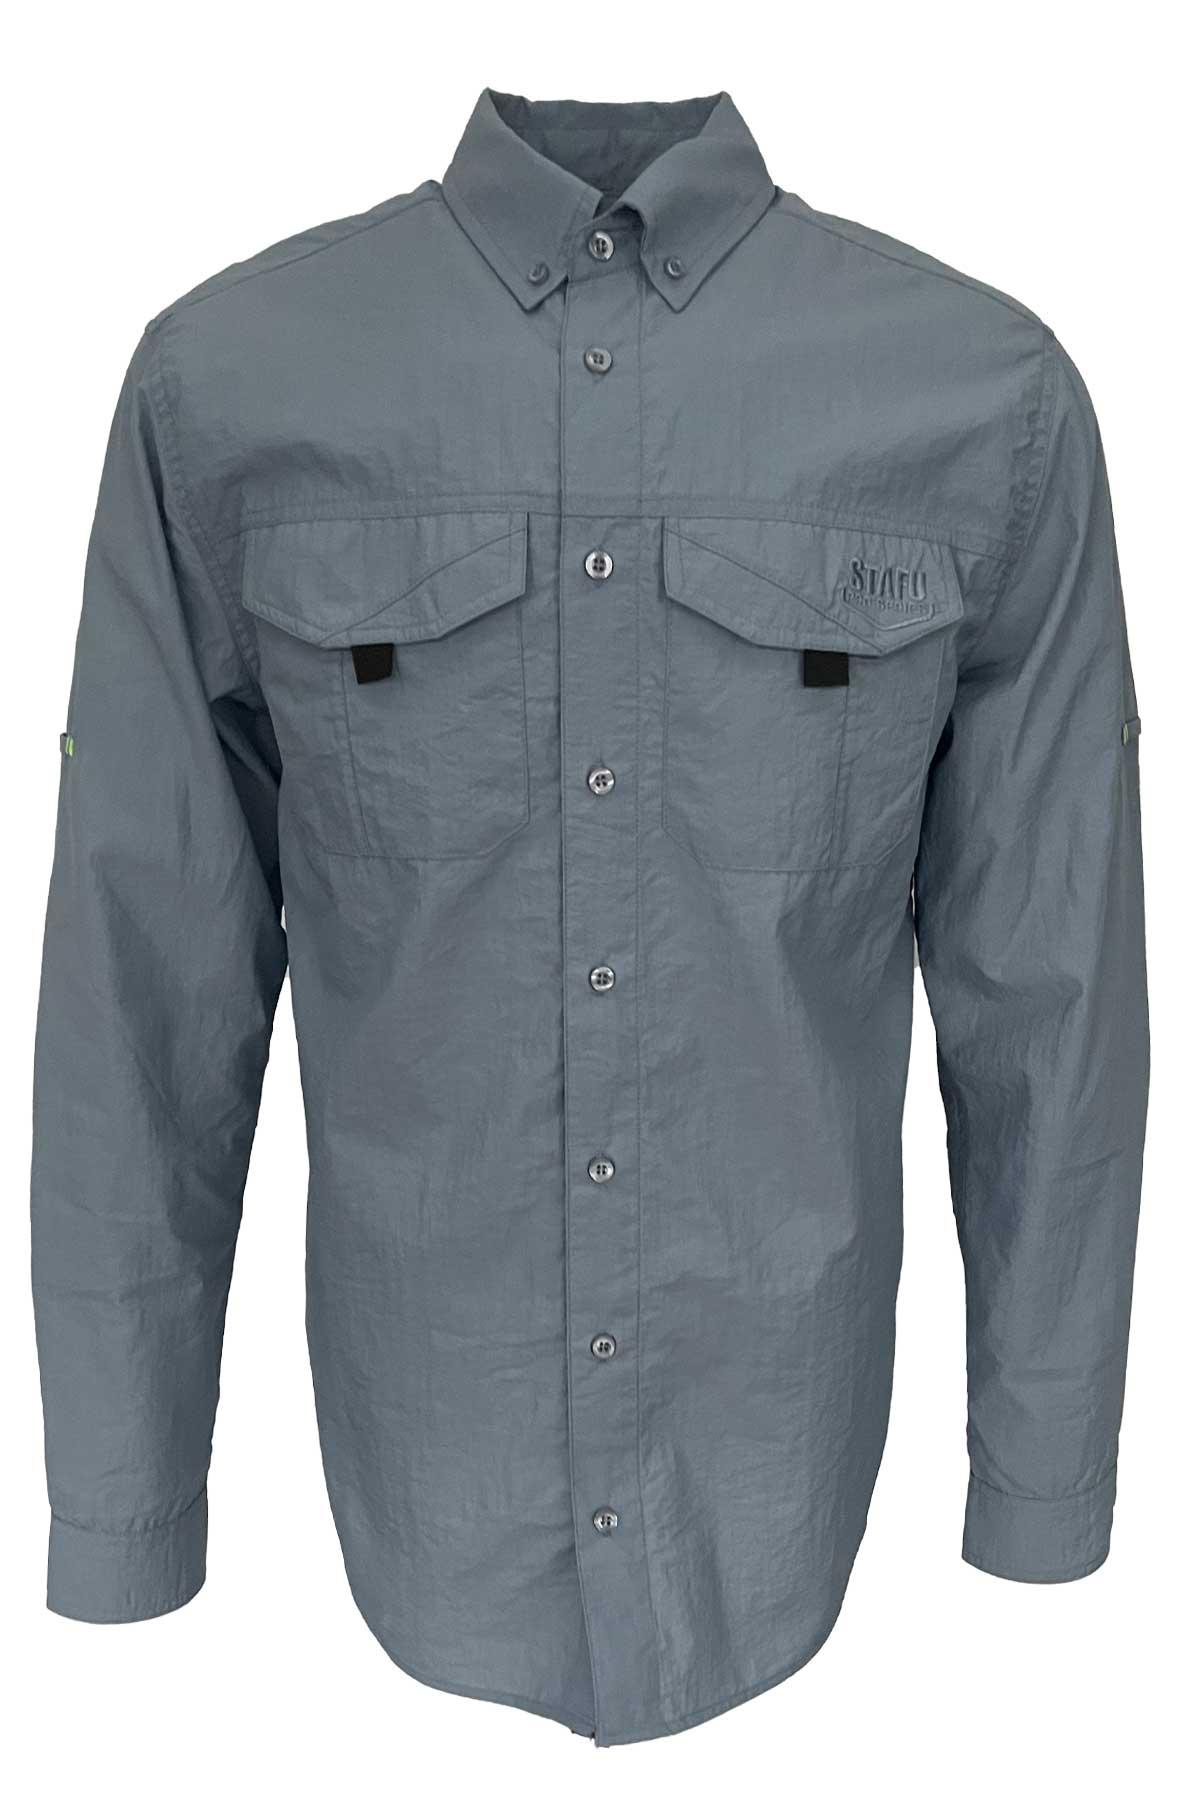 Eclipse Men's Long Sleeve Perforated Fisherman Sailor Grey Button-Up Shirt